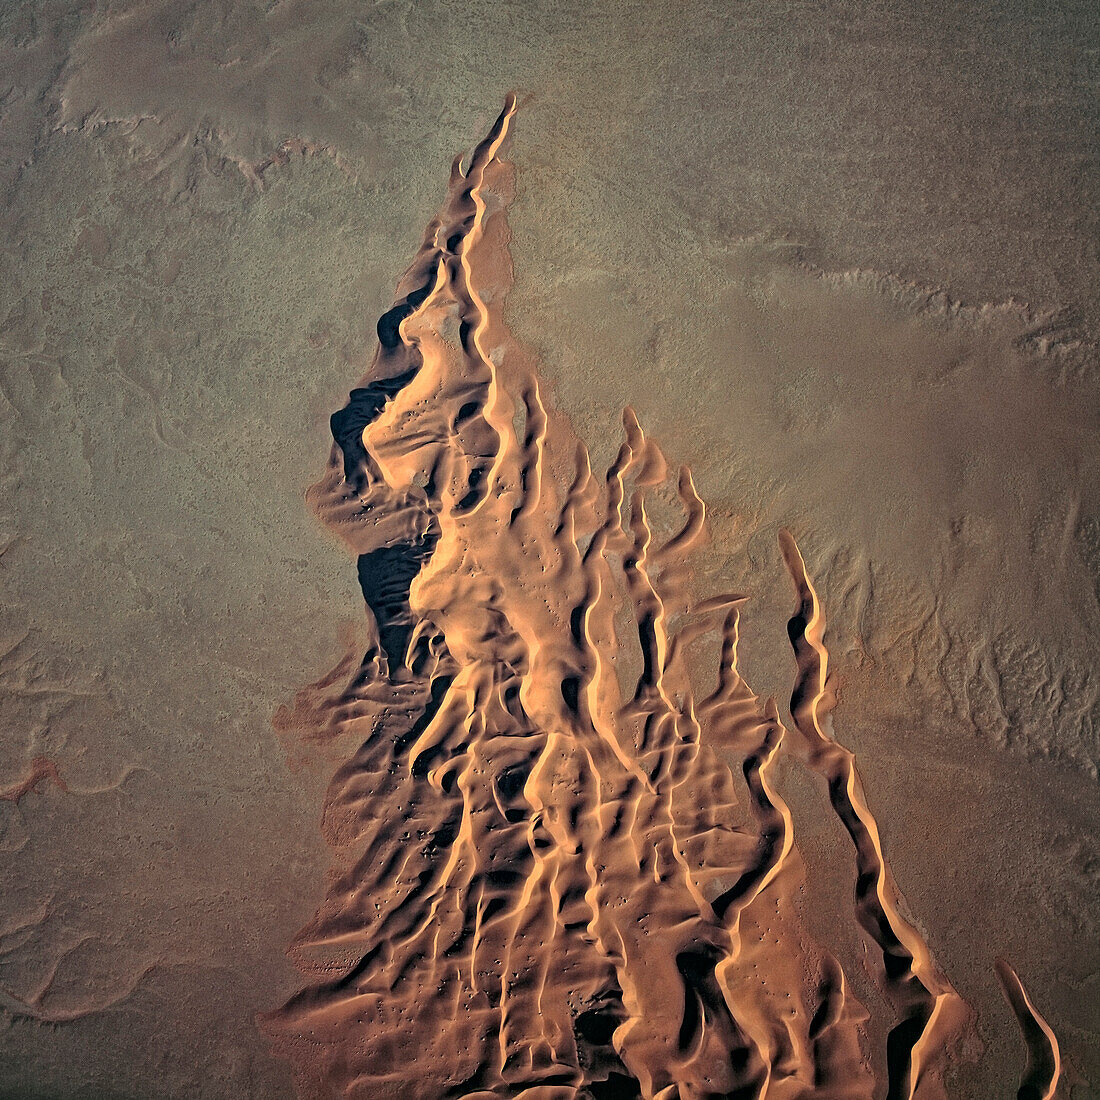 Sand dunes, Namib desert, Namibia